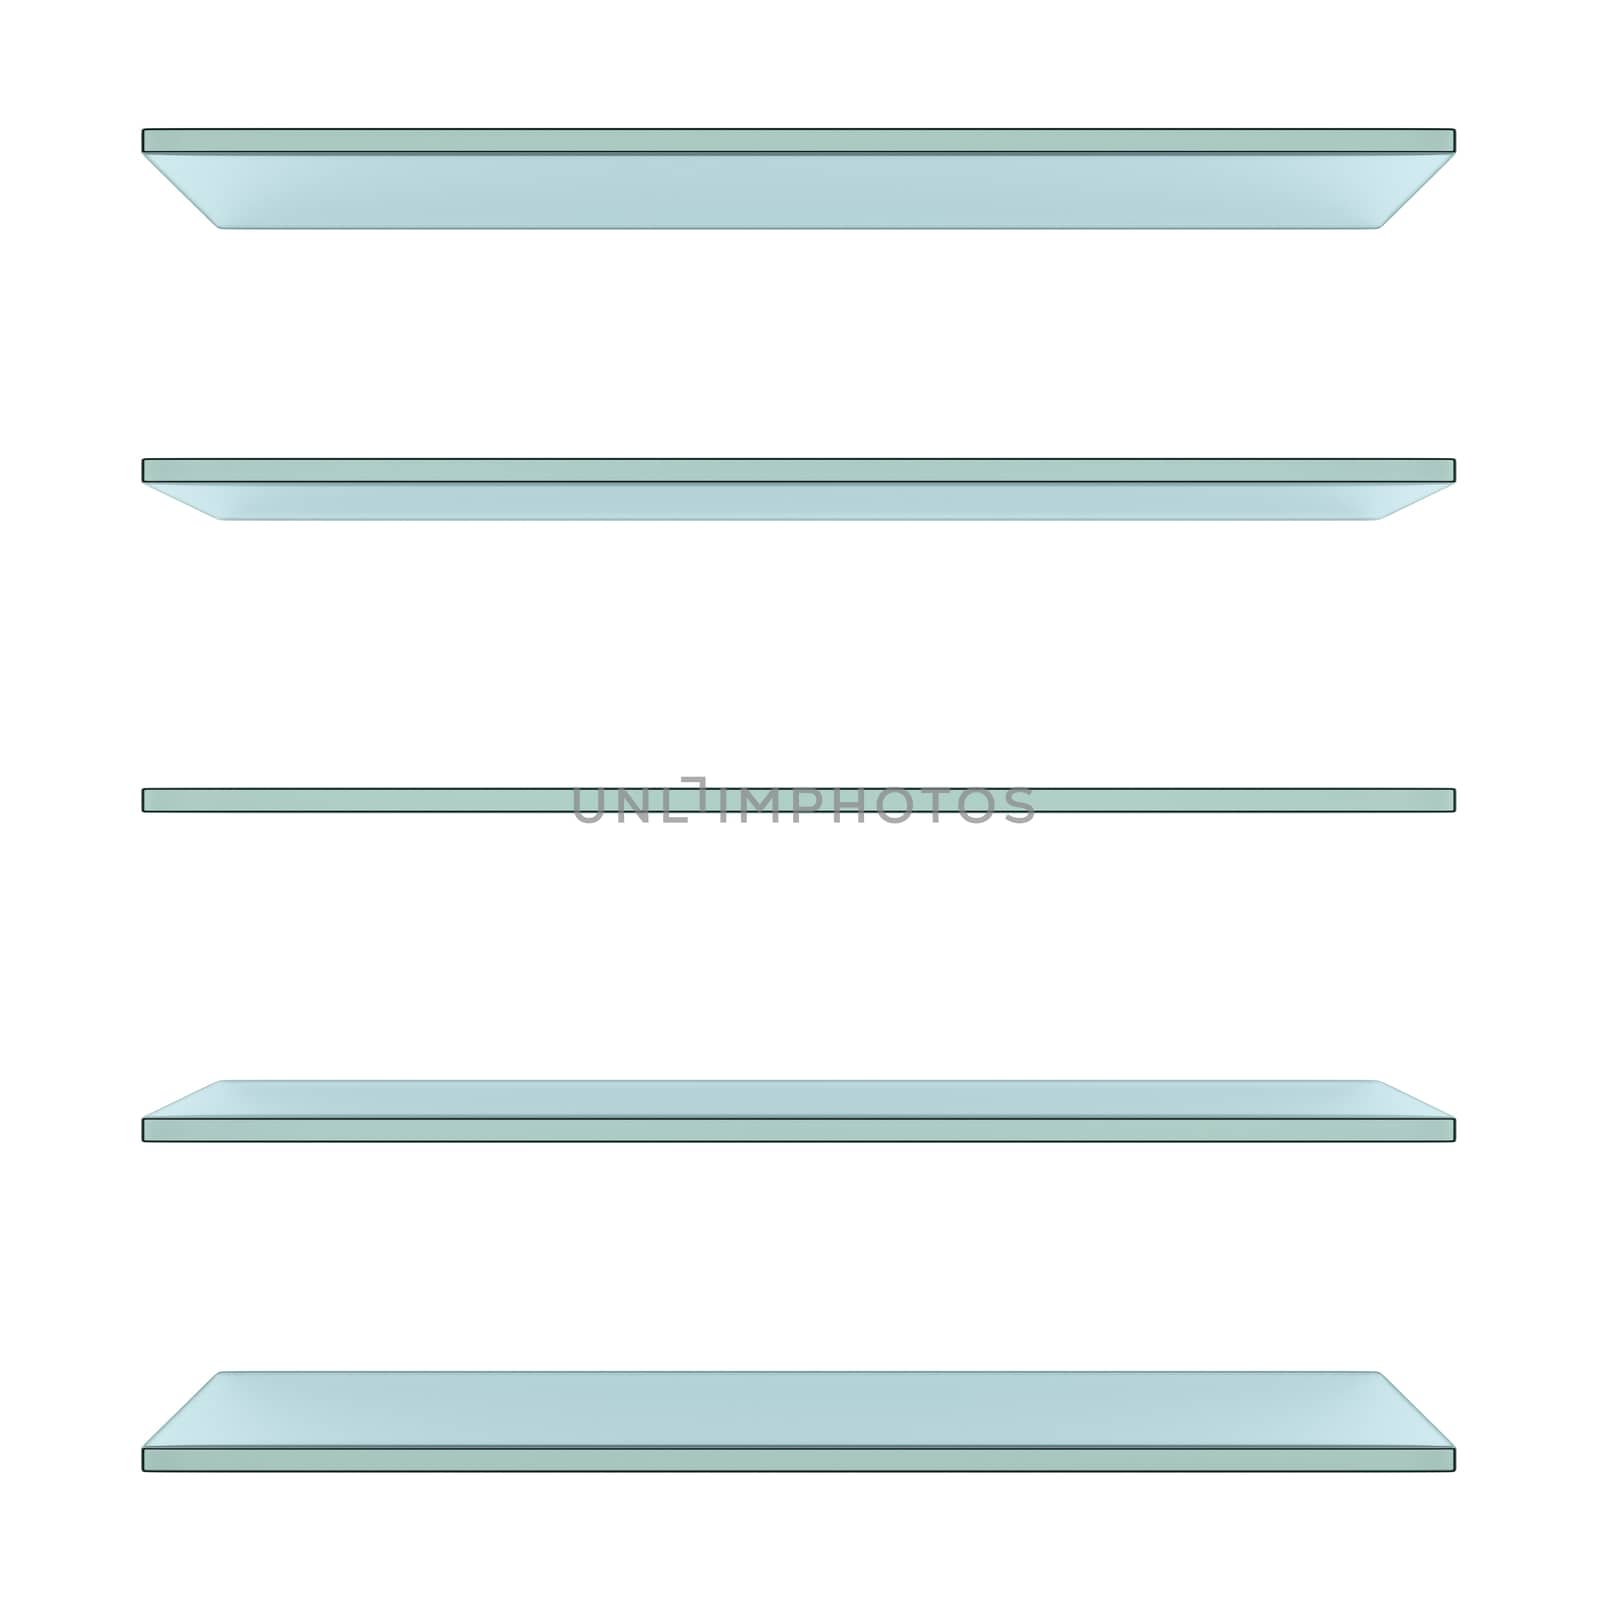 Realistic transparent glass shelves on white background. 3d illustration